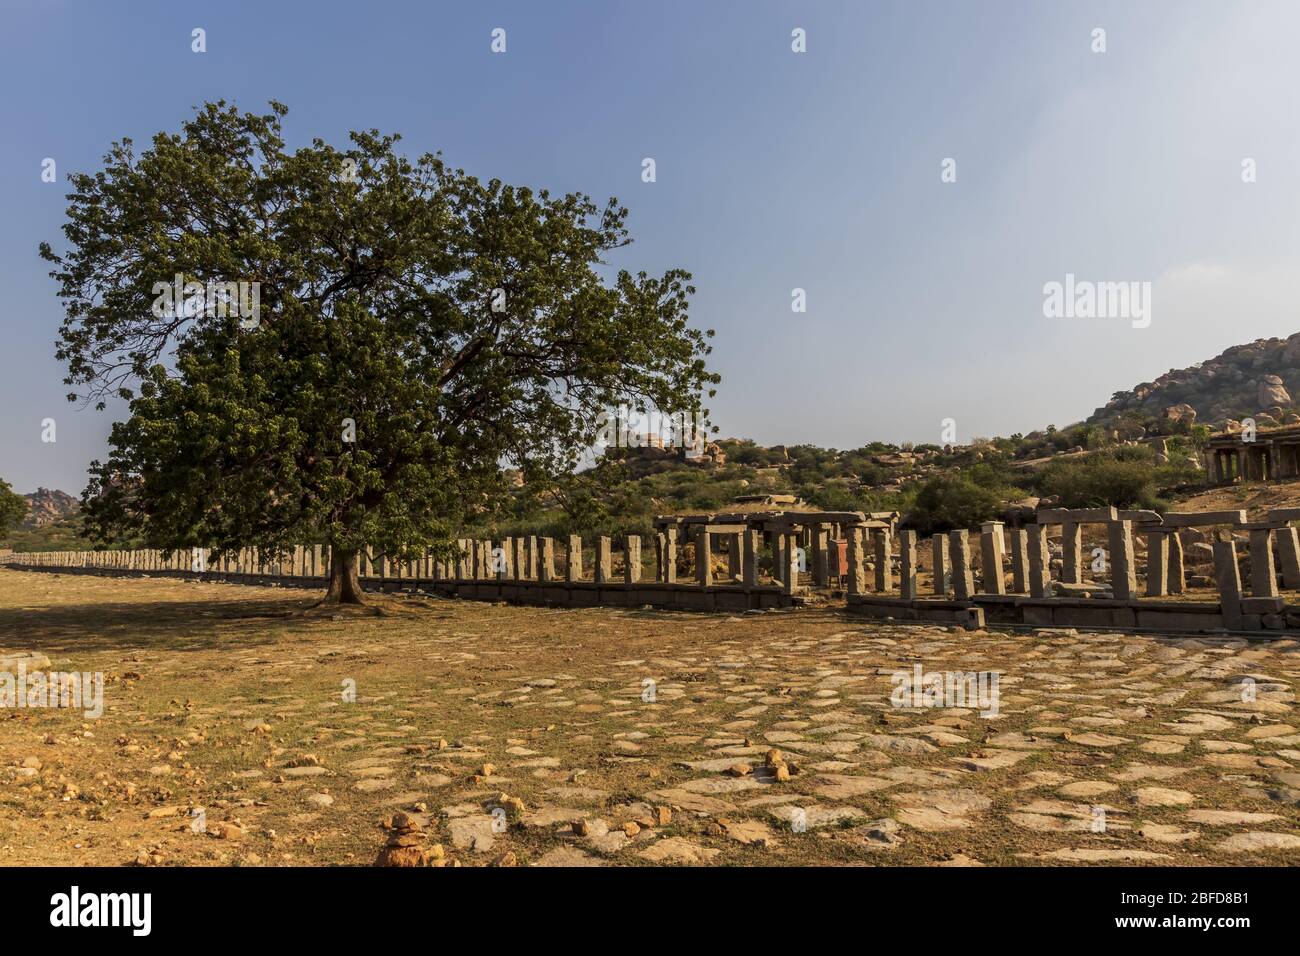 Ancient civilization in Hampi. India, State Karnataka. Old Hindu temples and ruins. Tree on foreground. Stock Photo